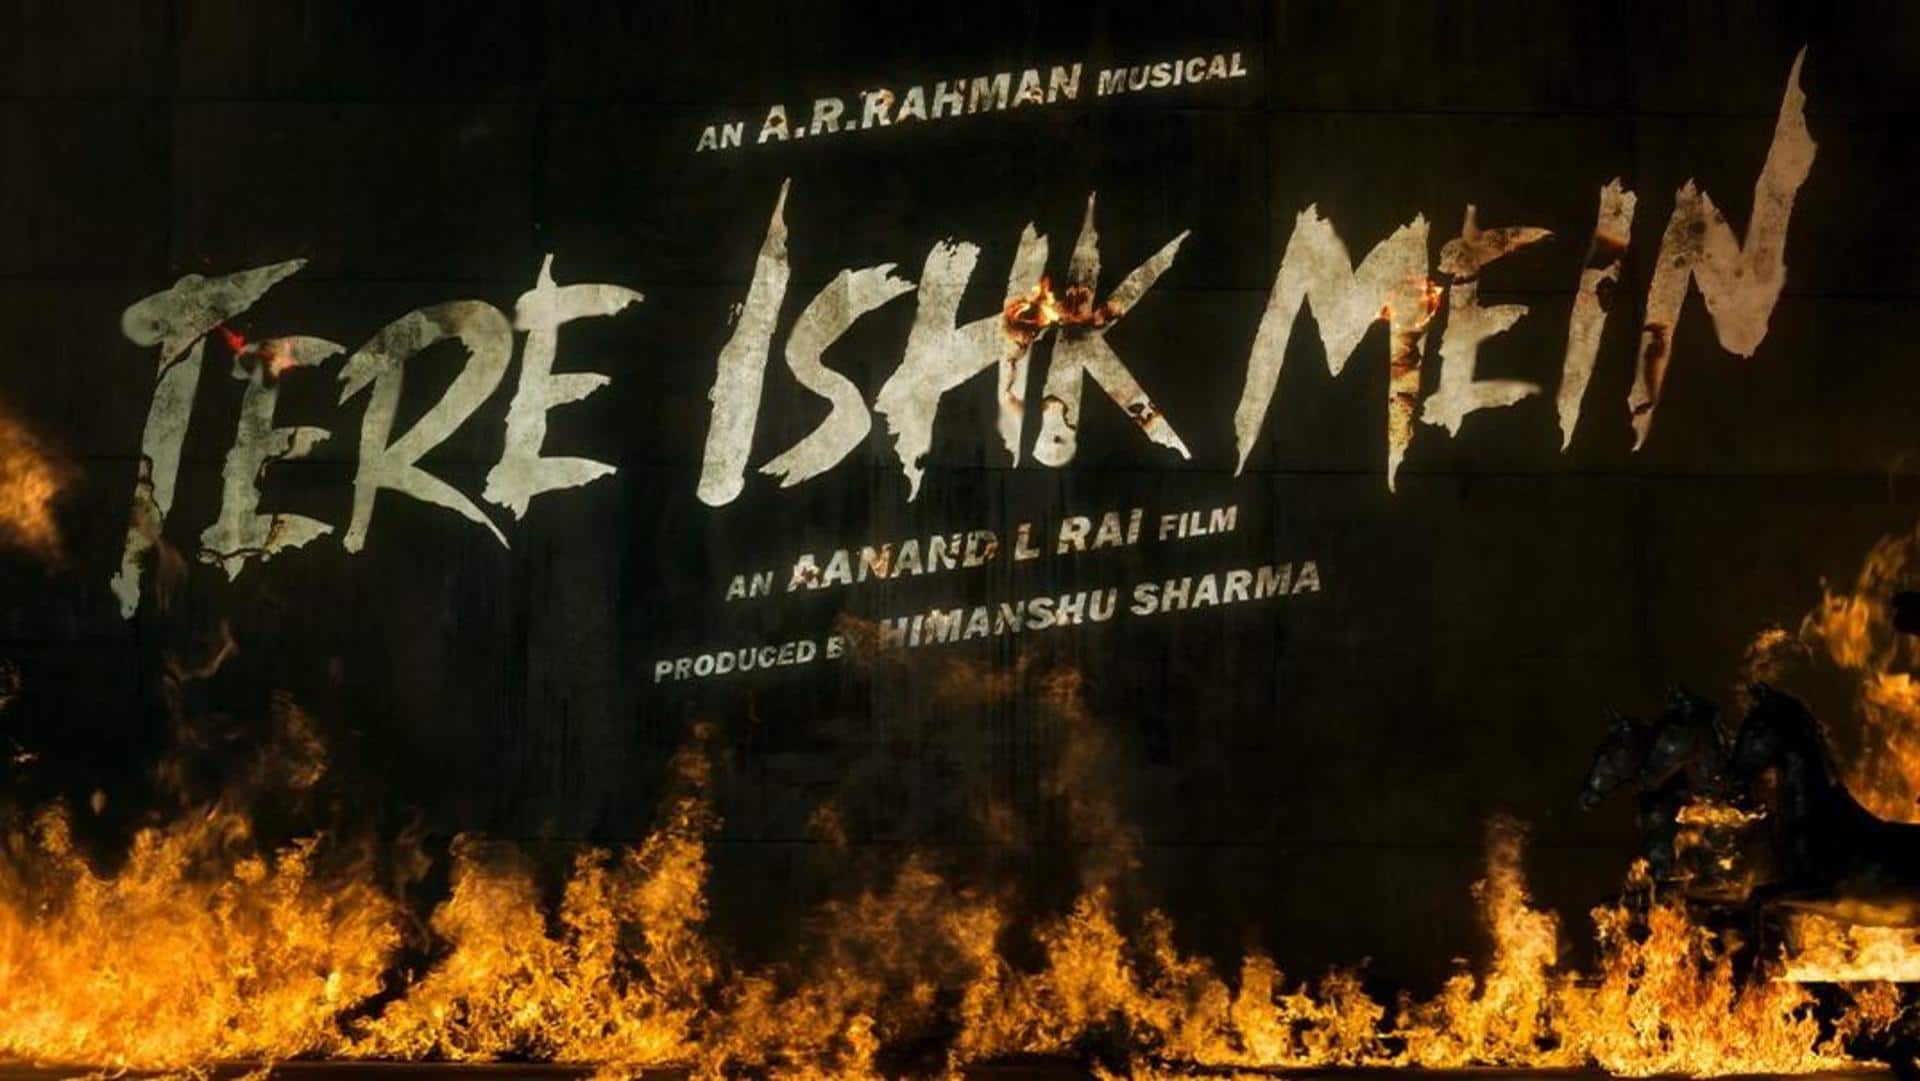 Dhanush announces 'Tere Ishk Mein' as 'Raanjhanaa' completes a decade